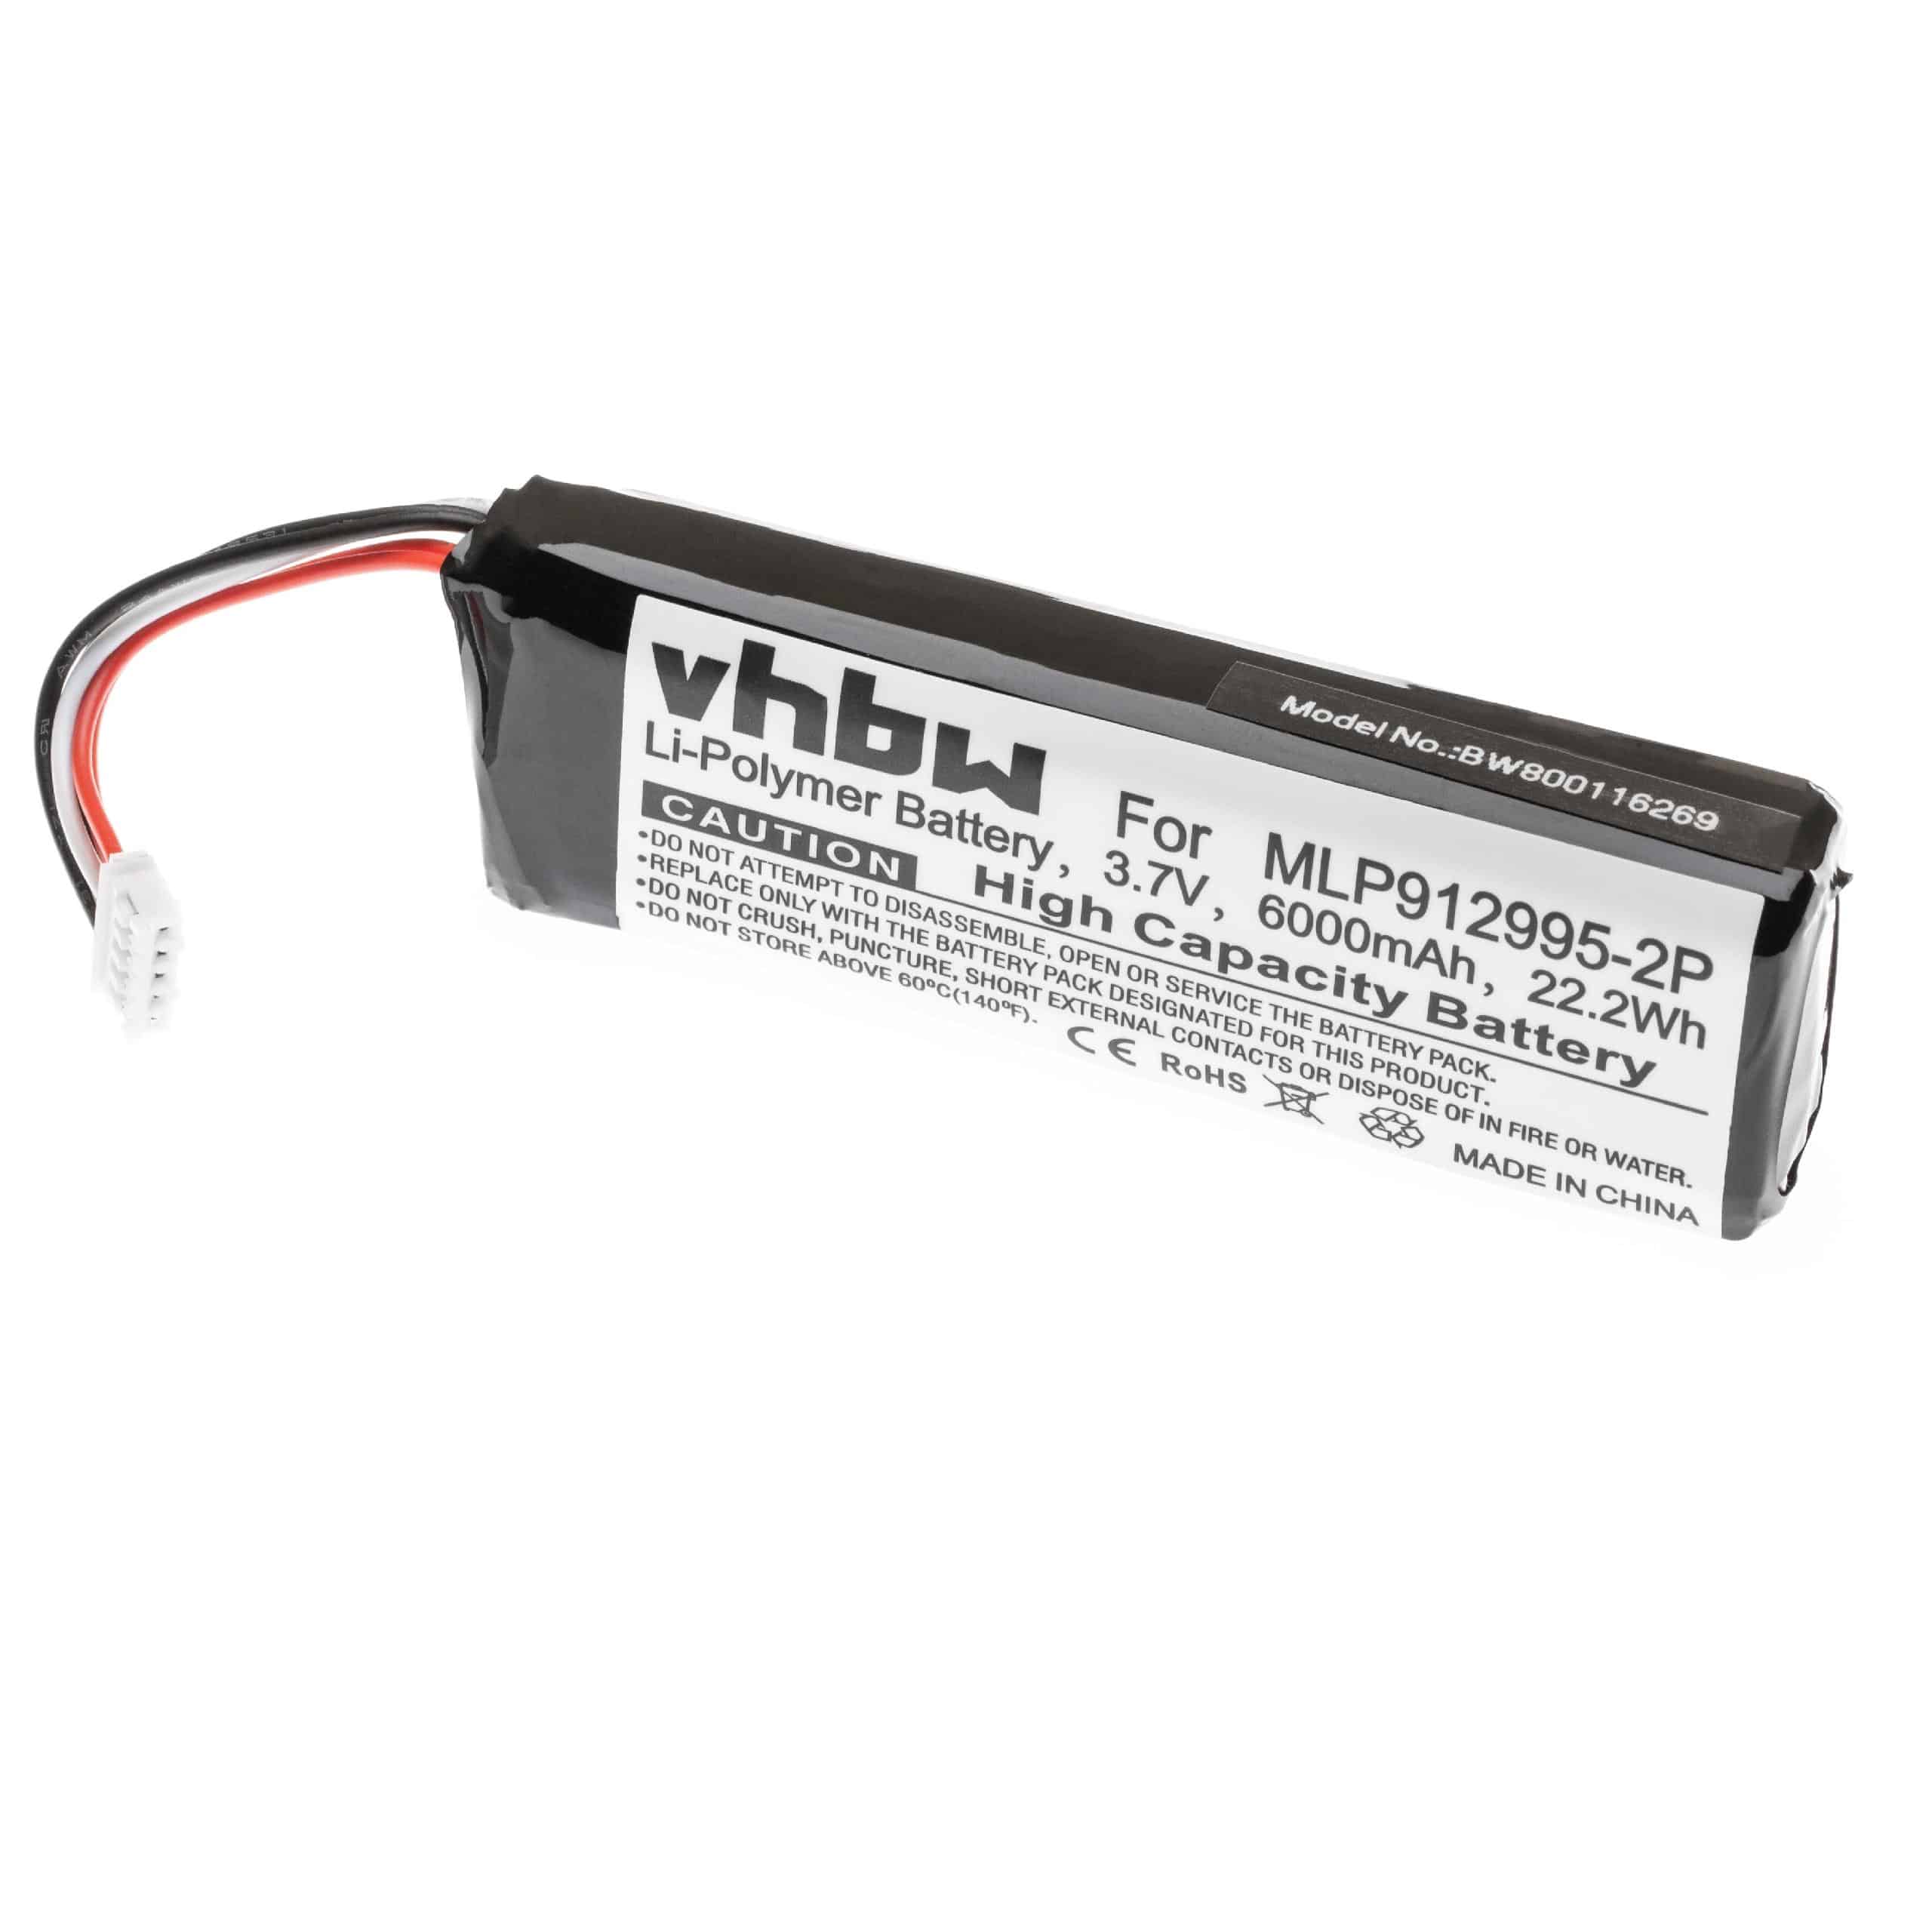 Batterie remplace JBL MLP912995-2P pour enceinte JBL - 6000mAh 3,7V Li-polymère